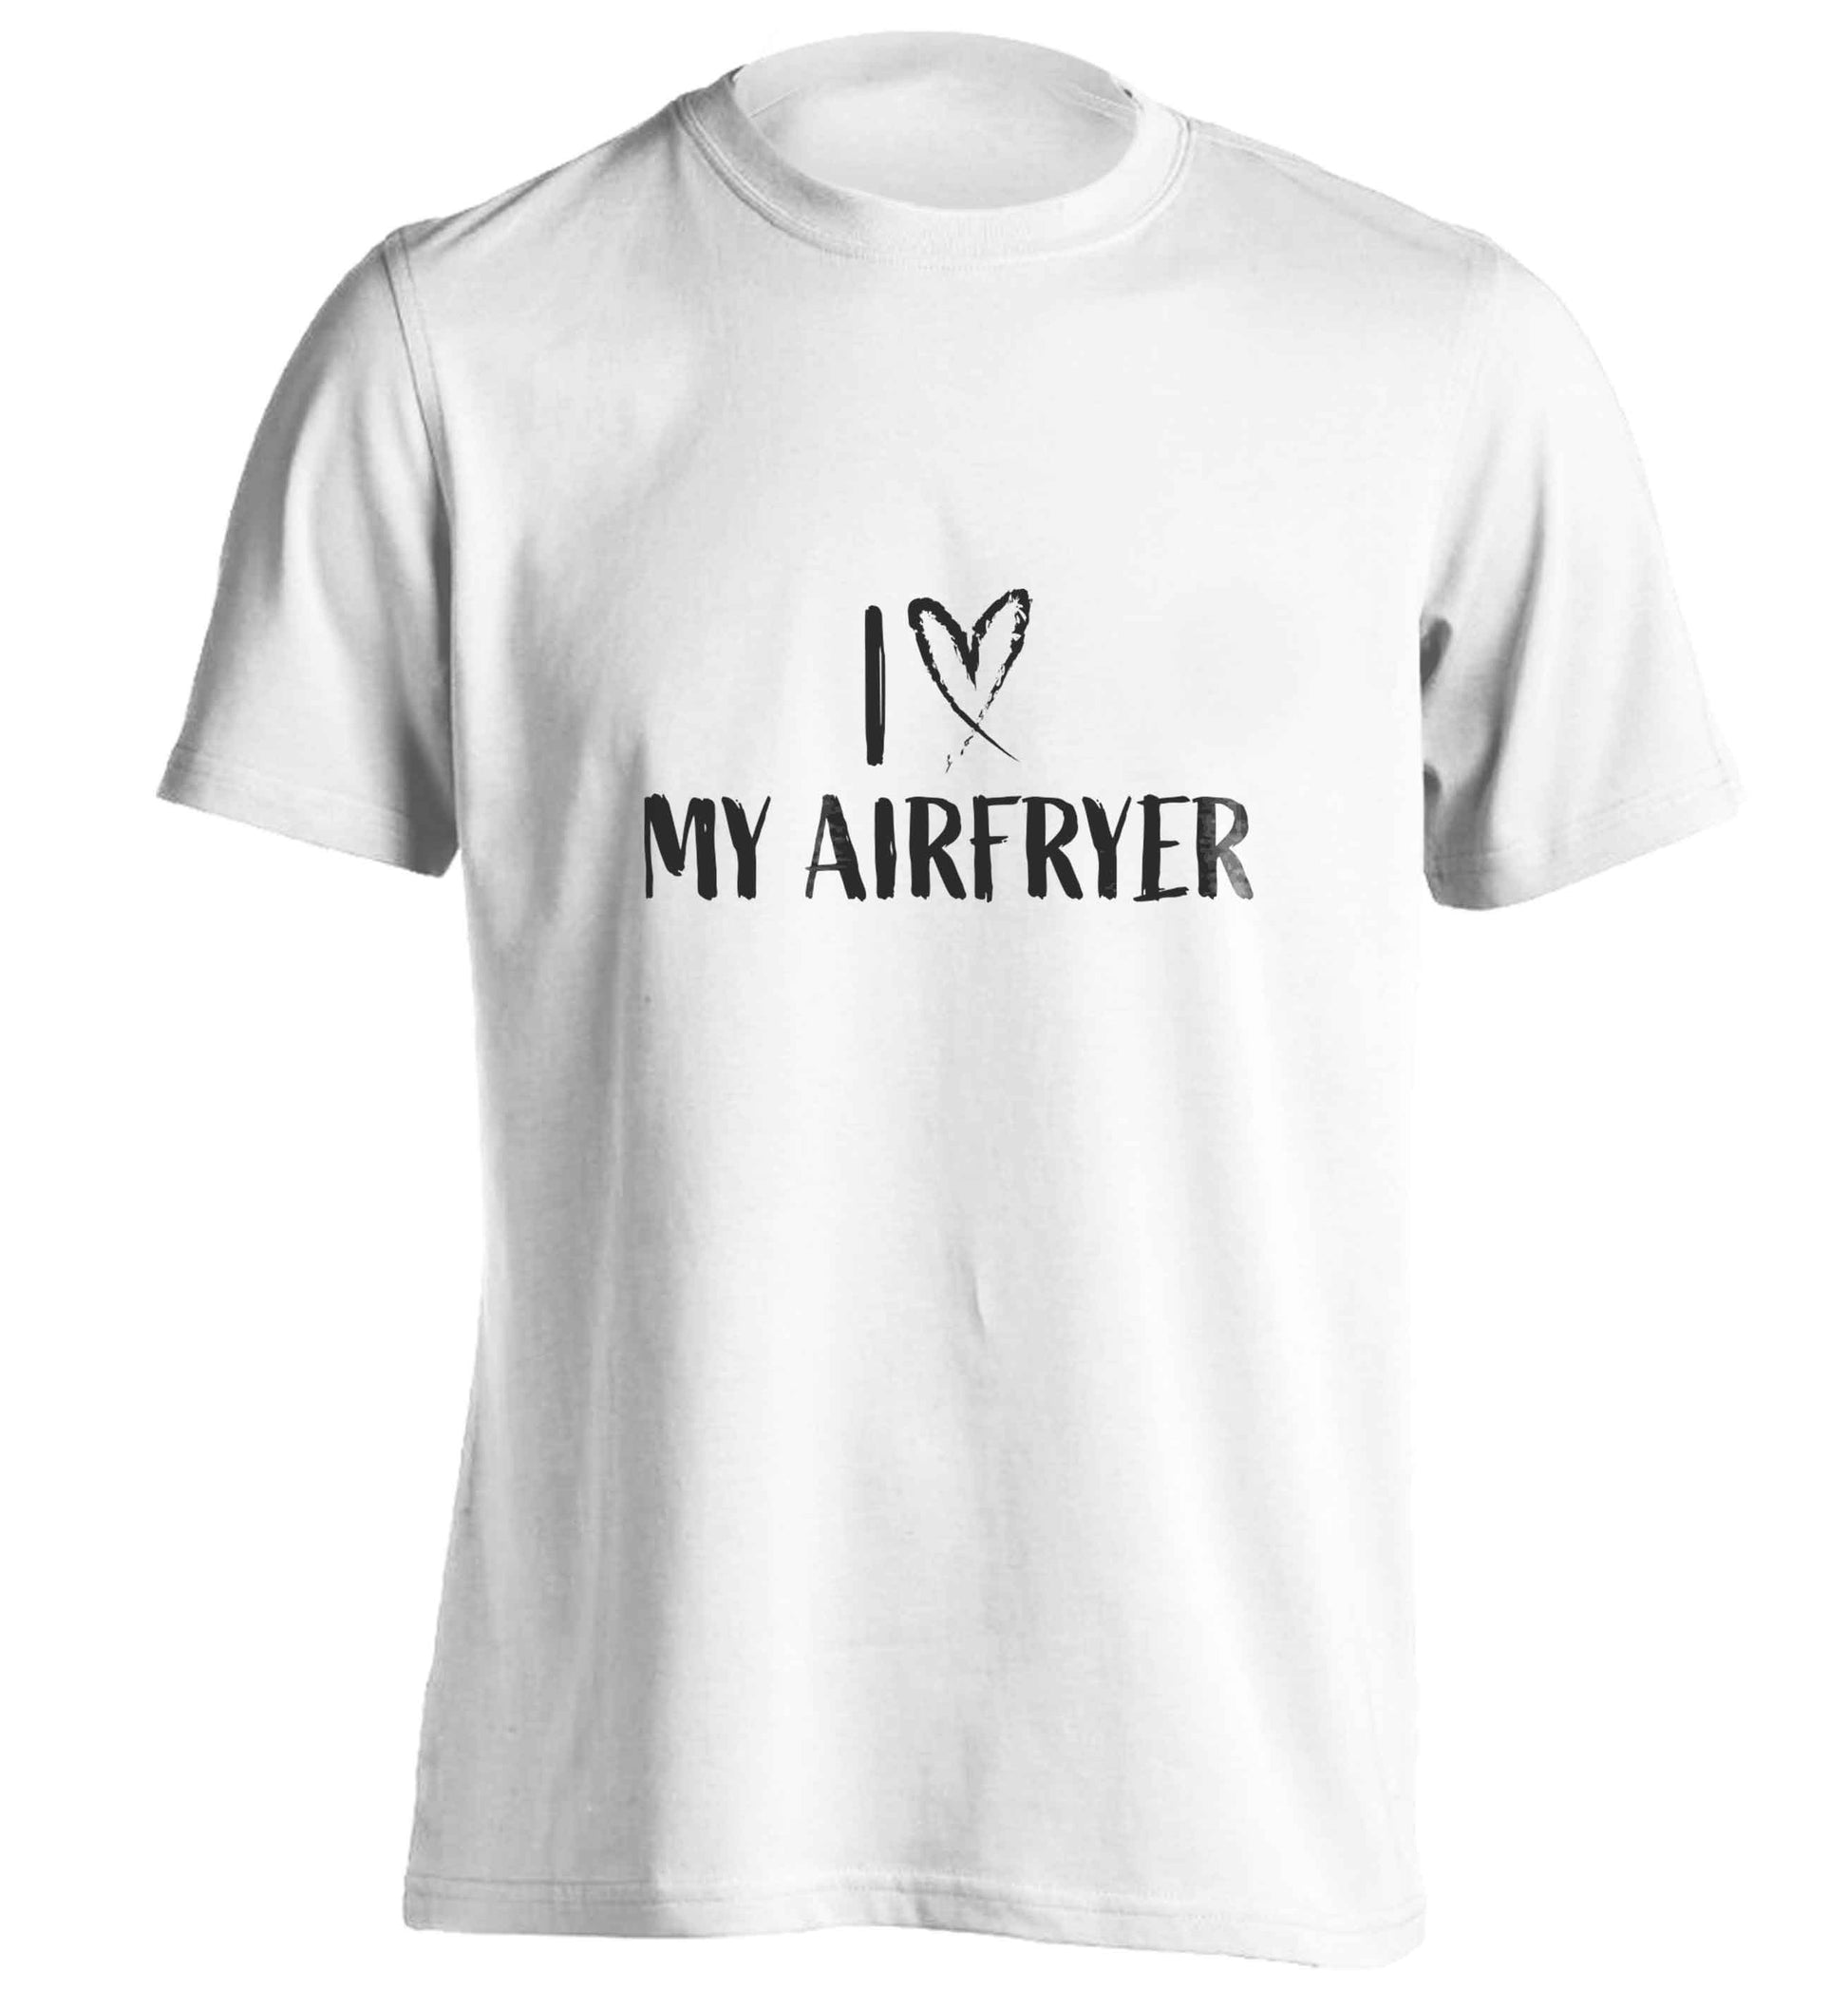 I love my airfryeradults unisex white Tshirt 2XL